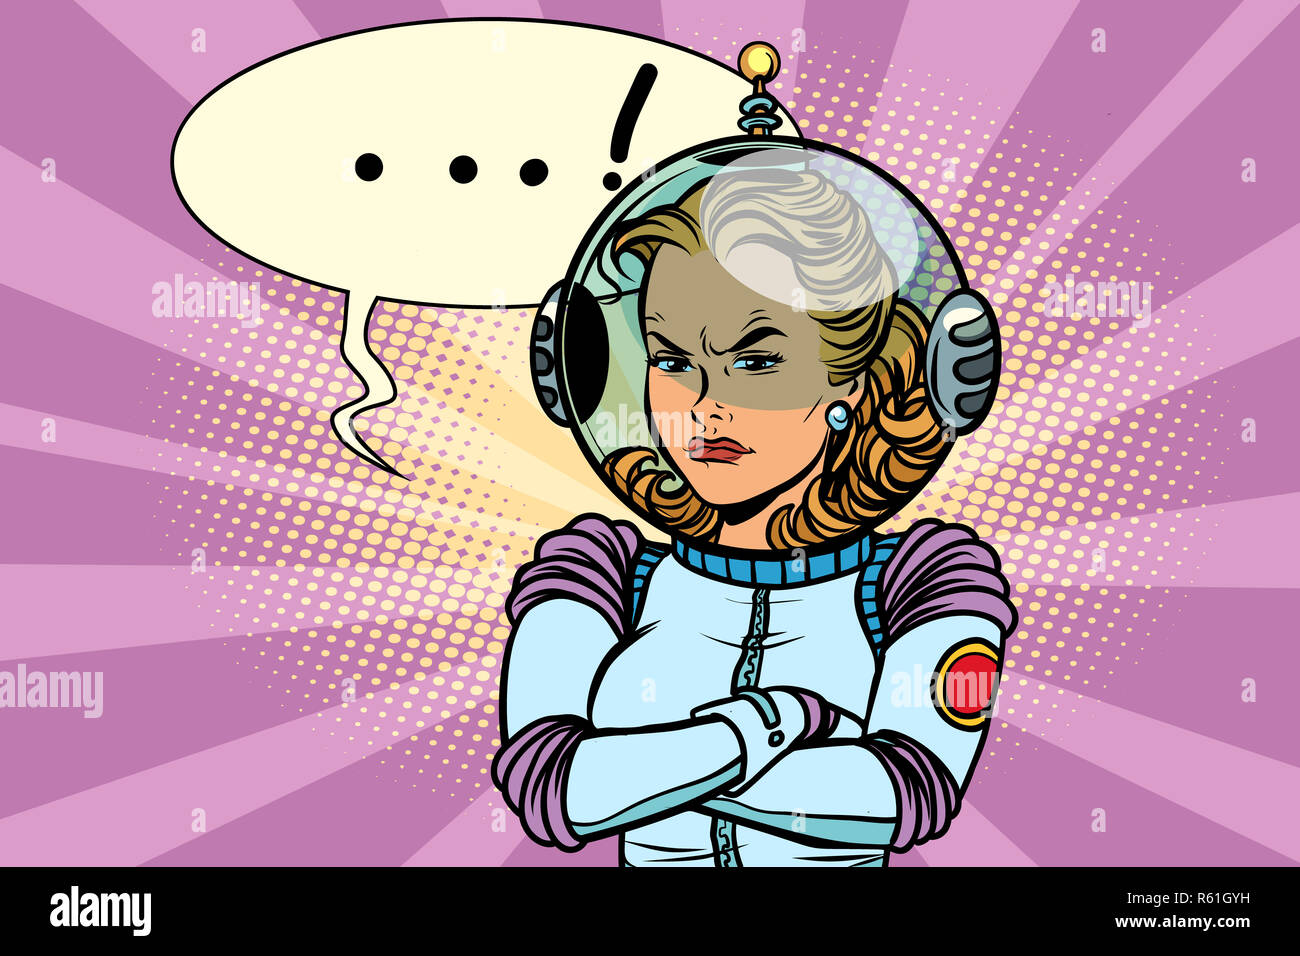 Comic illustration of angry woman astronaut Stock Photo